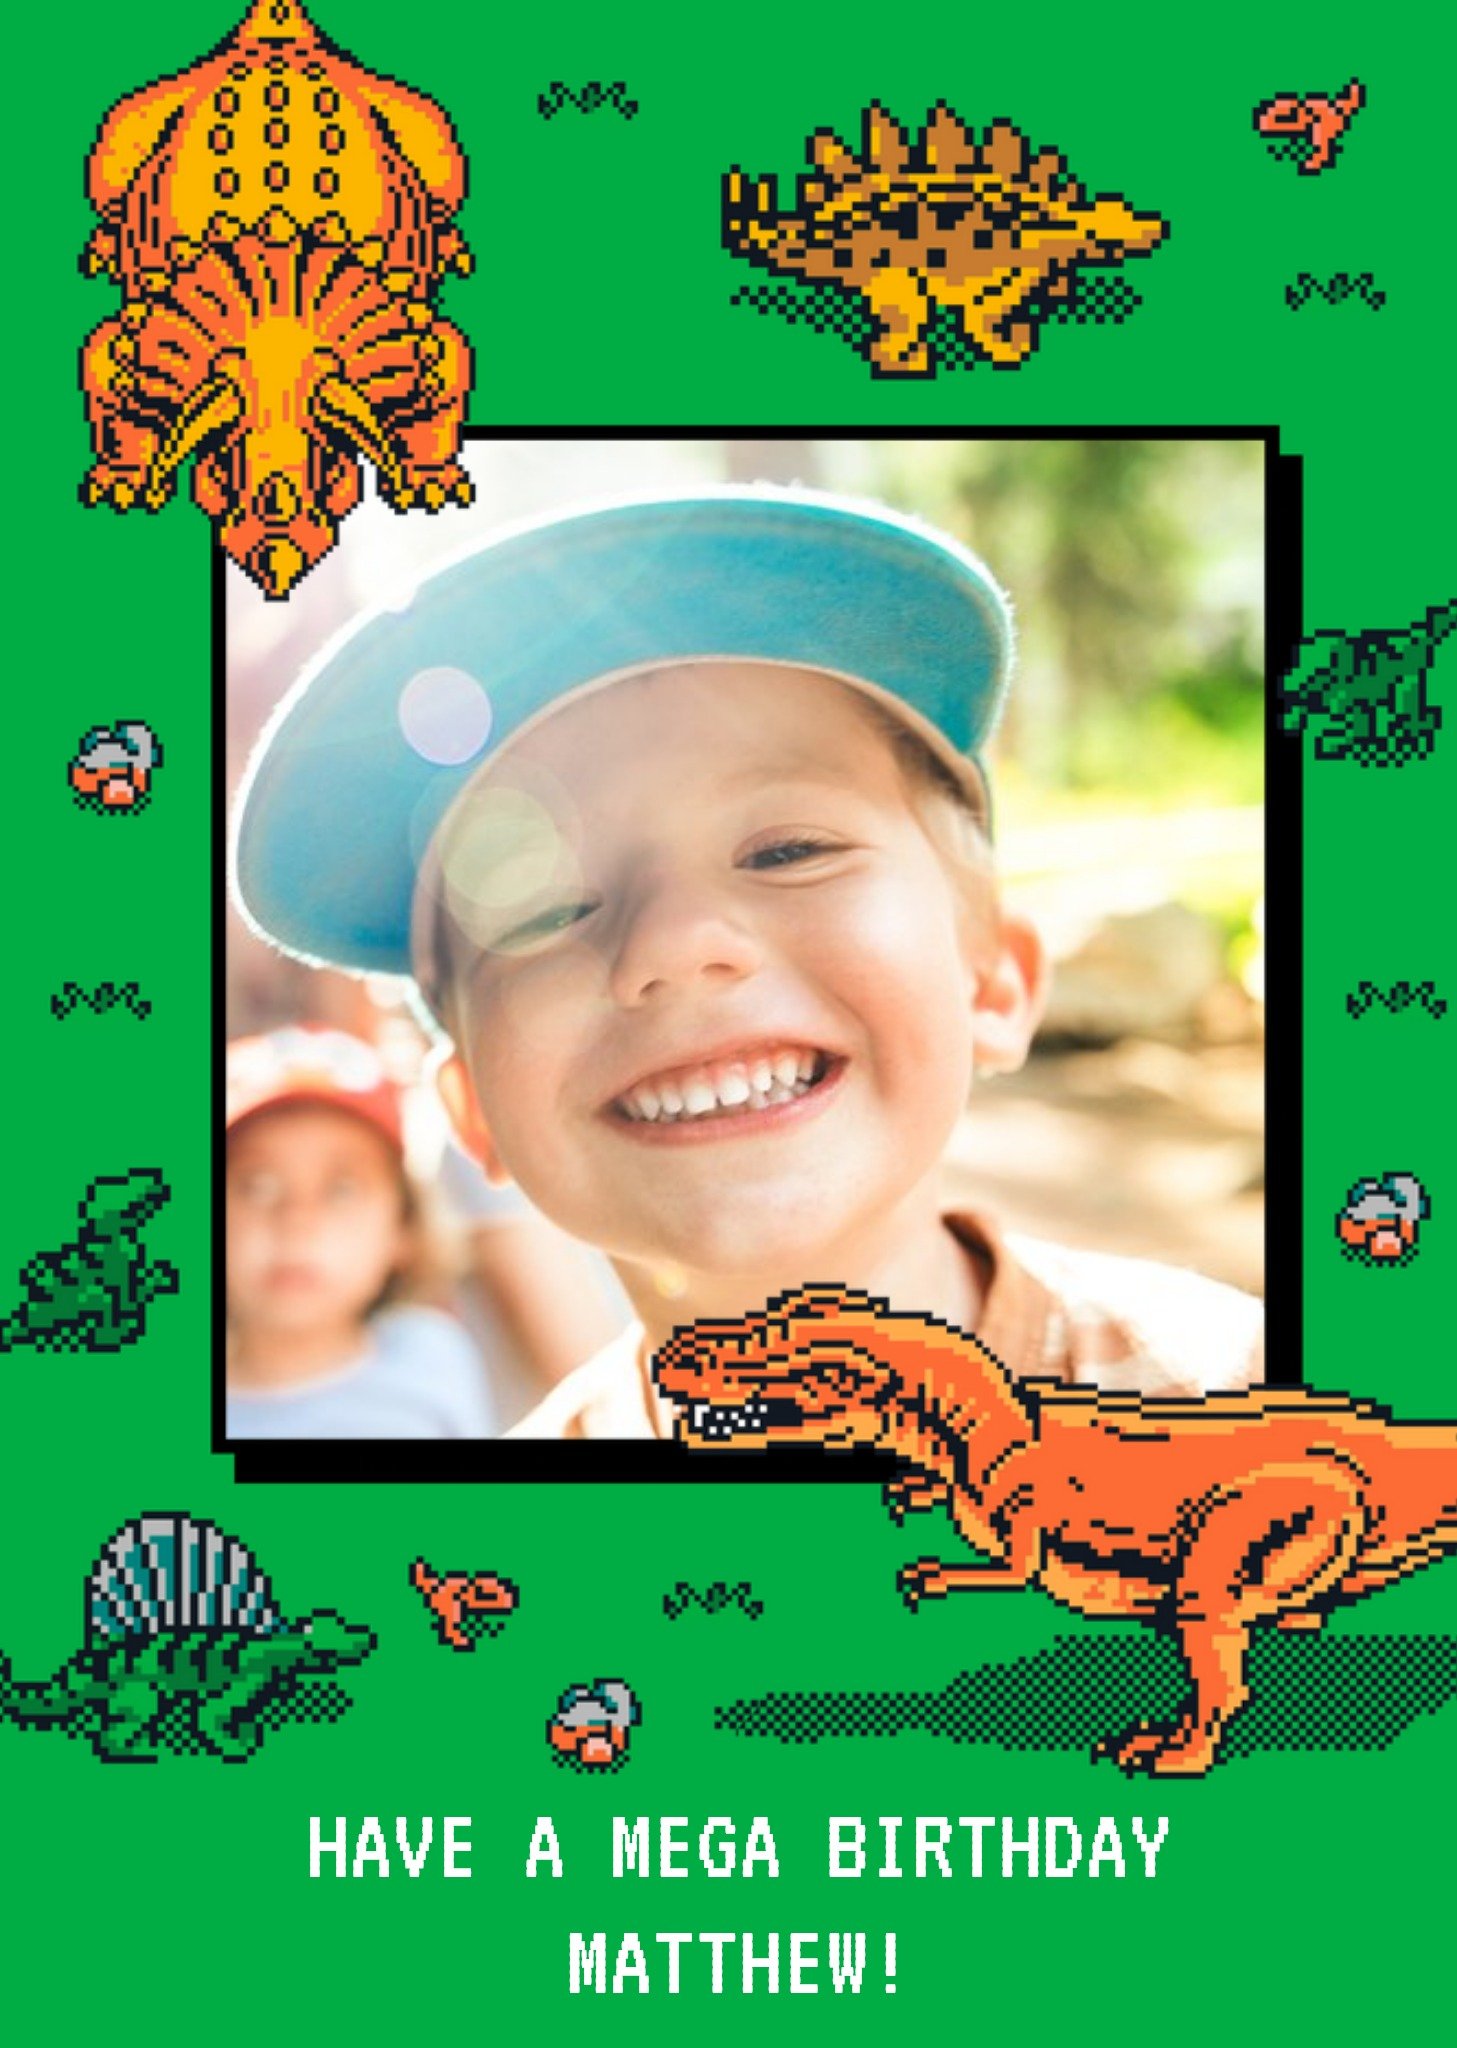 Moonpig Jurassic Park Retro 8-Bit Dinousaur Photo Upload Birthday Card Ecard